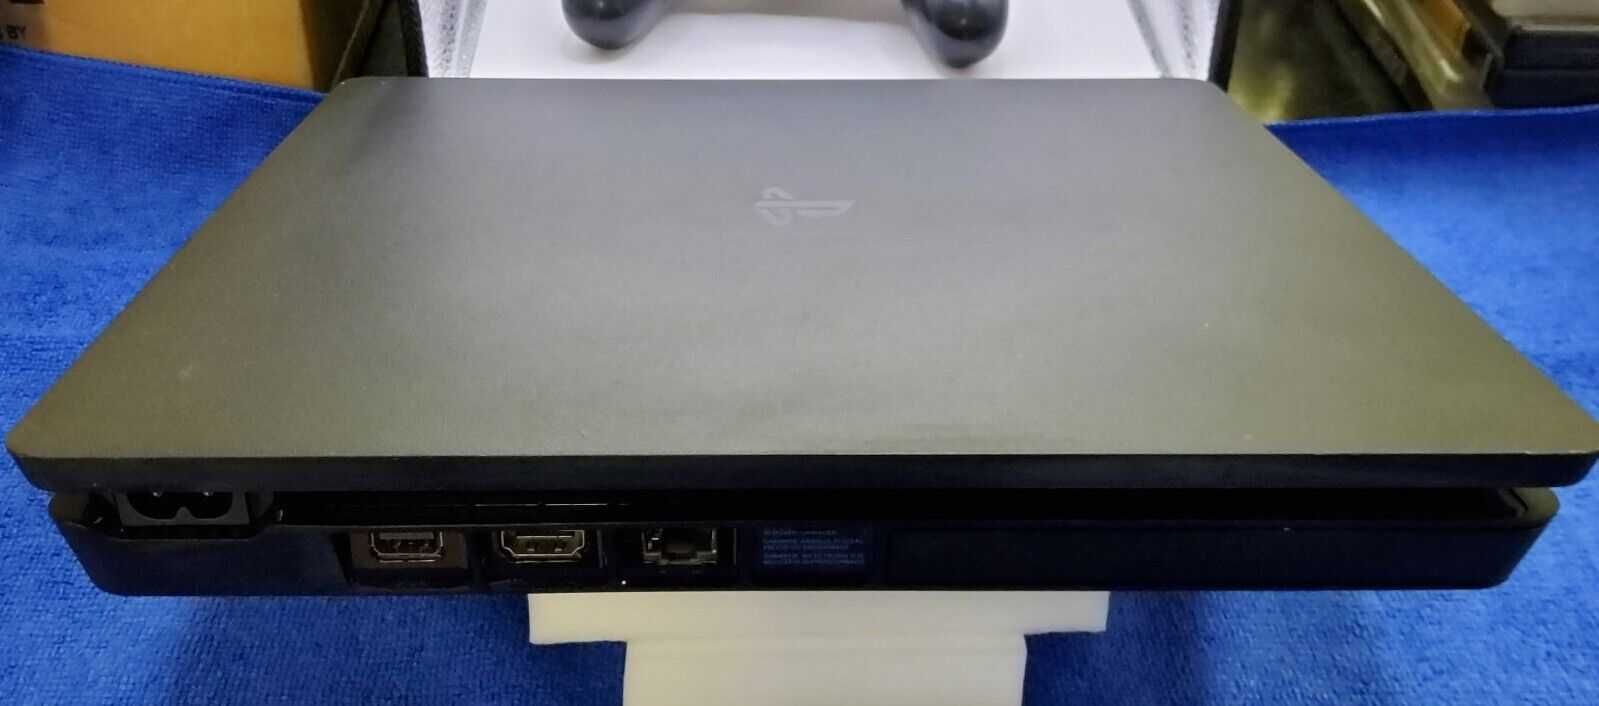 Consola Sony PlayStation Slim 1TB - negra